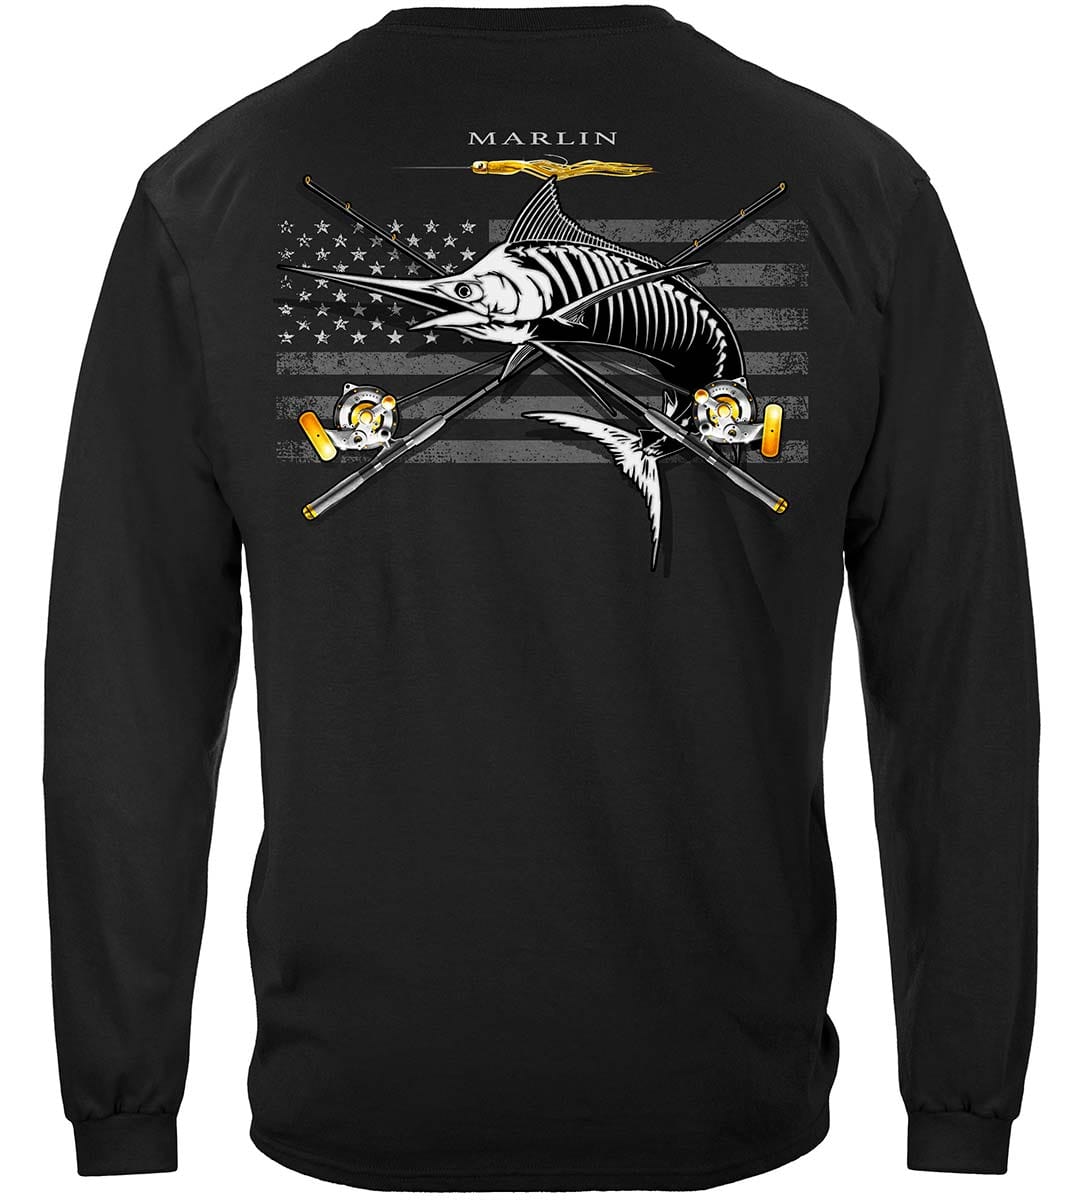 Black Flag Patriotic Marlin Premium T-Shirt